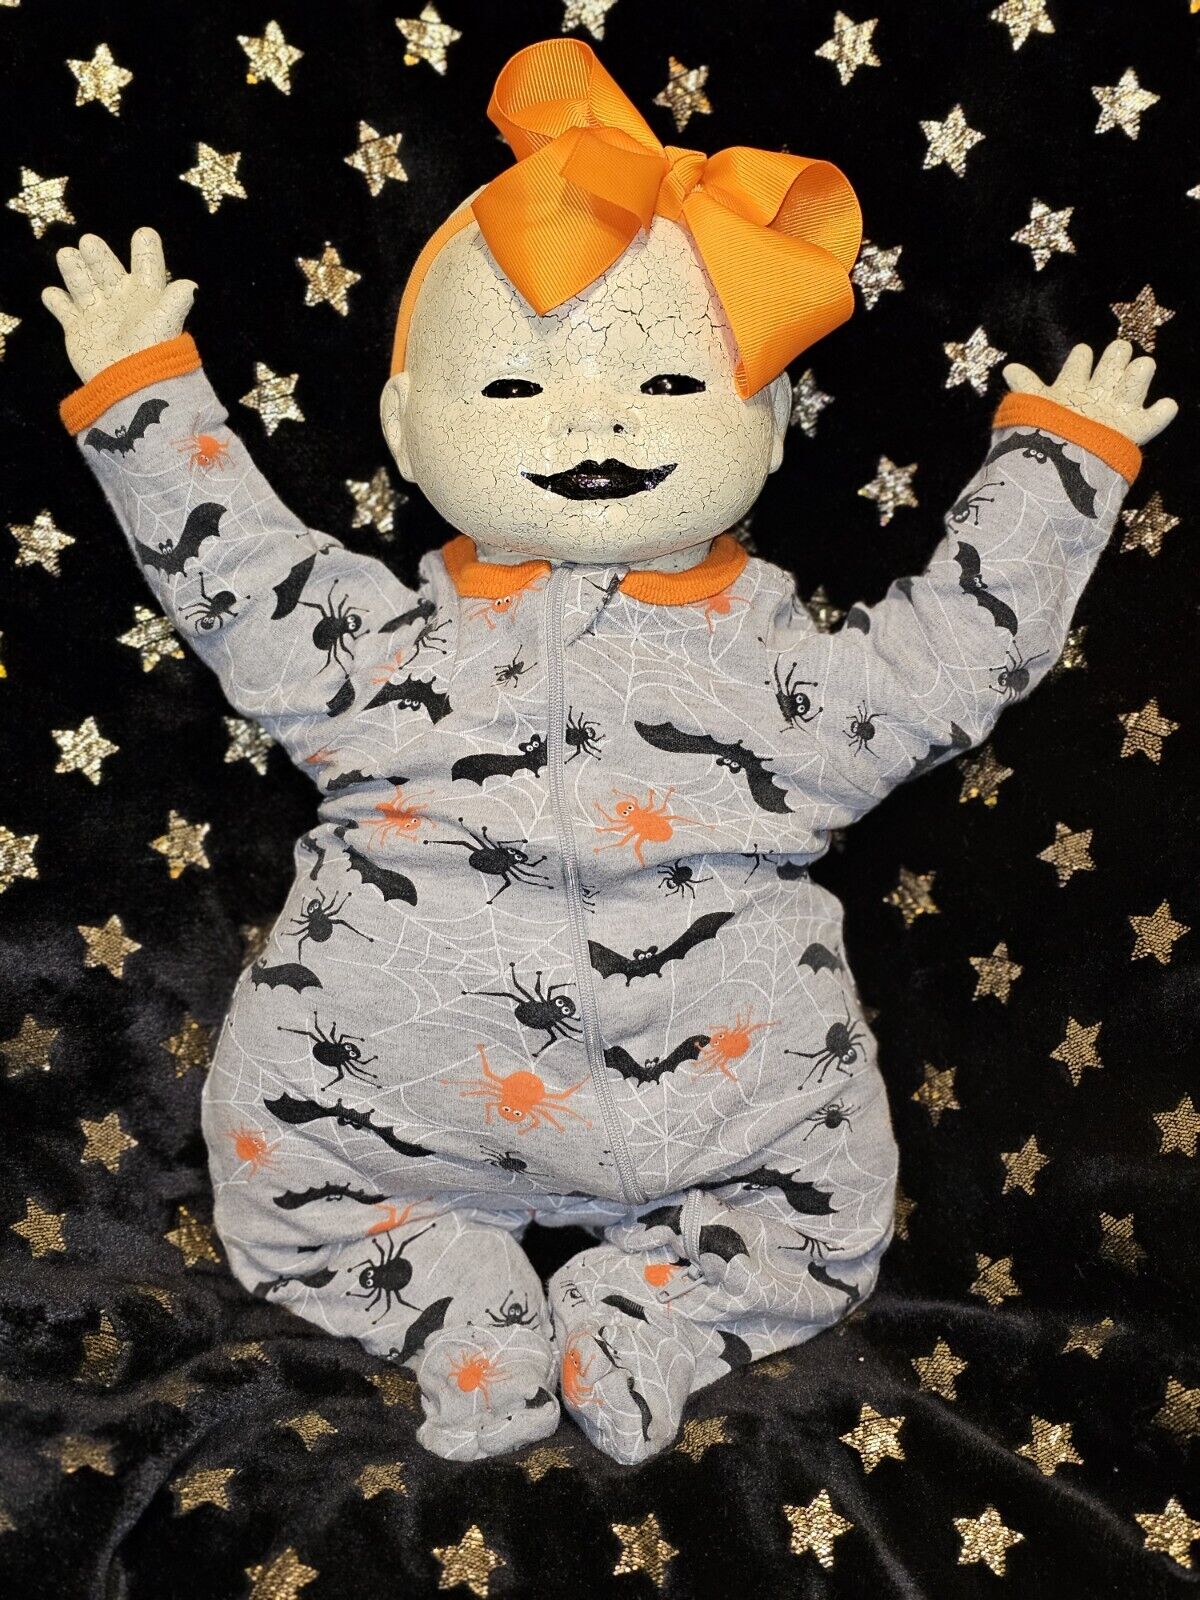 OOAK Spooky Creepy Baby Doll Porcelain Repaint Esther 